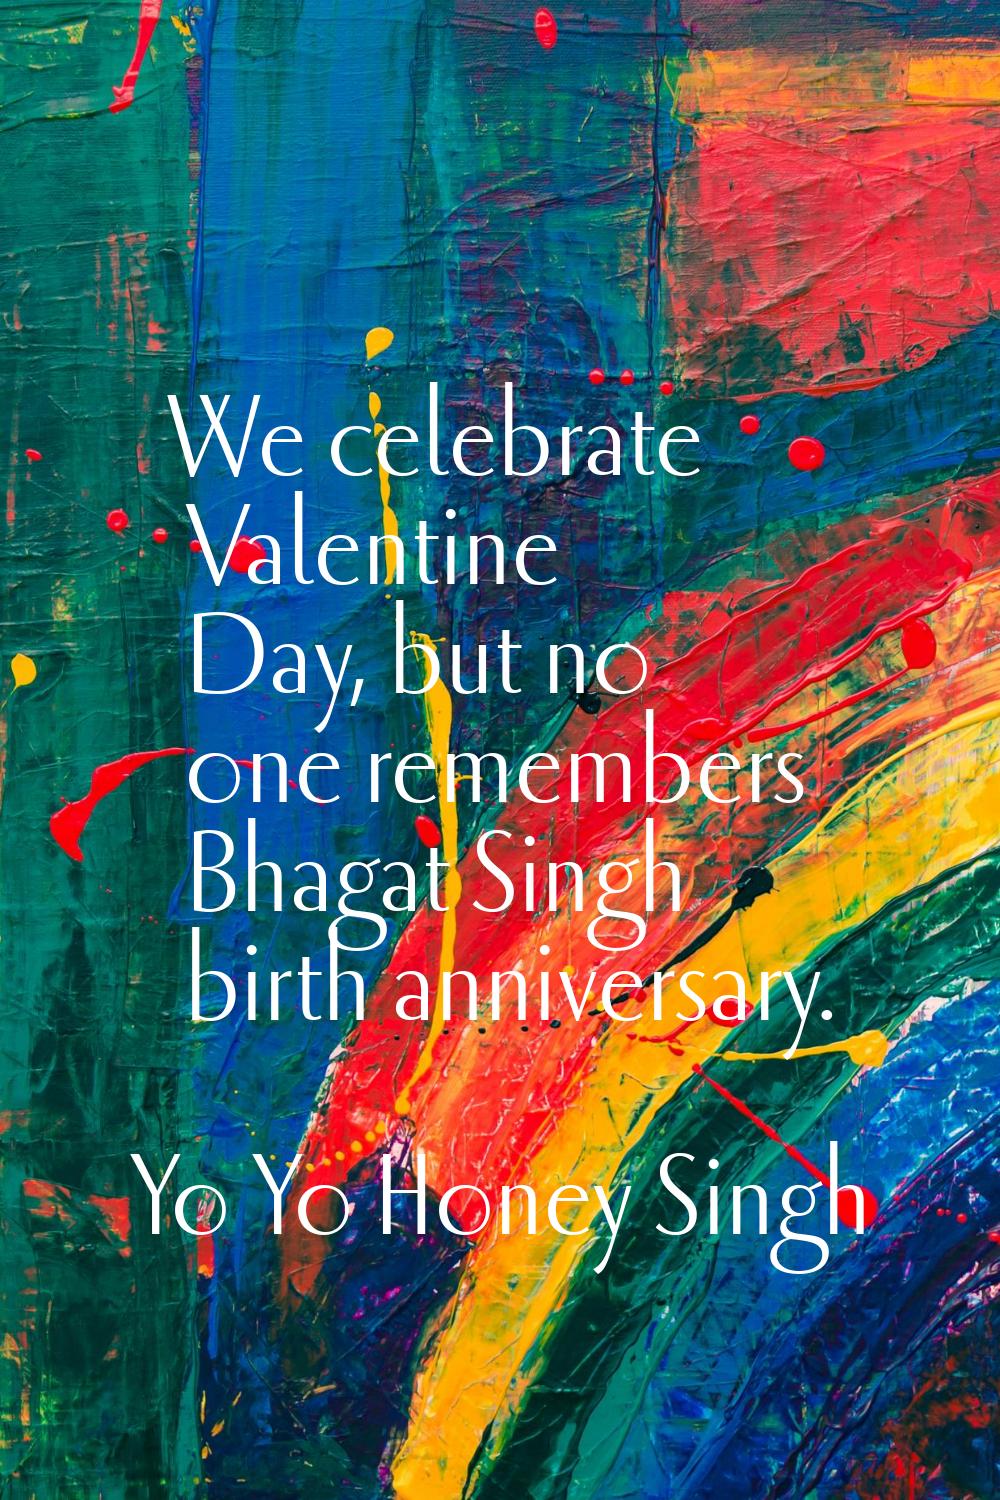 We celebrate Valentine Day, but no one remembers Bhagat Singh birth anniversary.